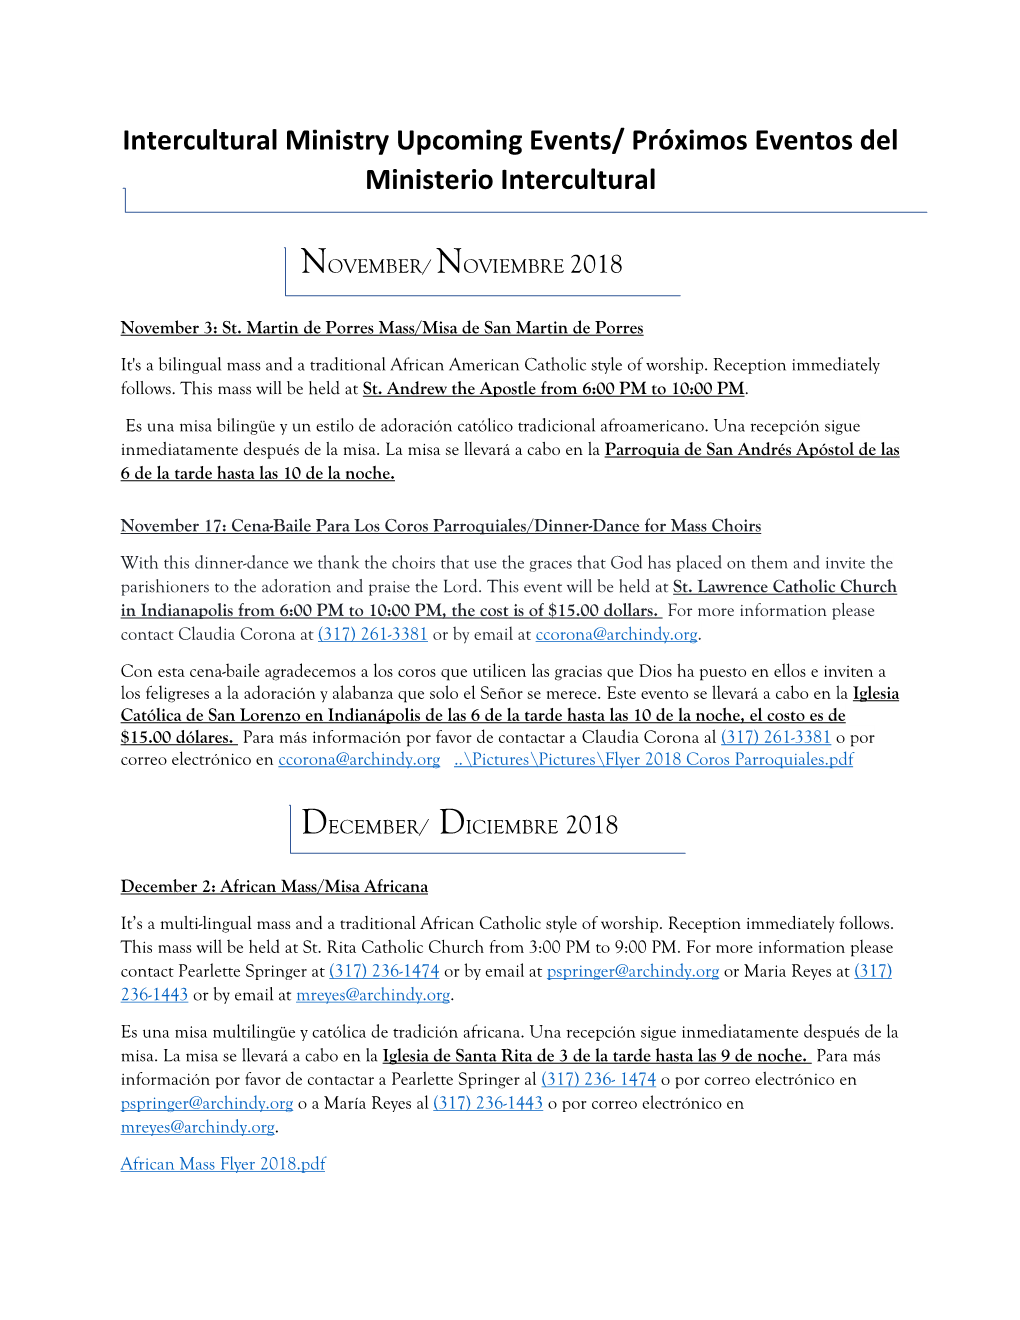 Intercultural Ministry Upcoming Events/ Próximos Eventos Del Ministerio Intercultural